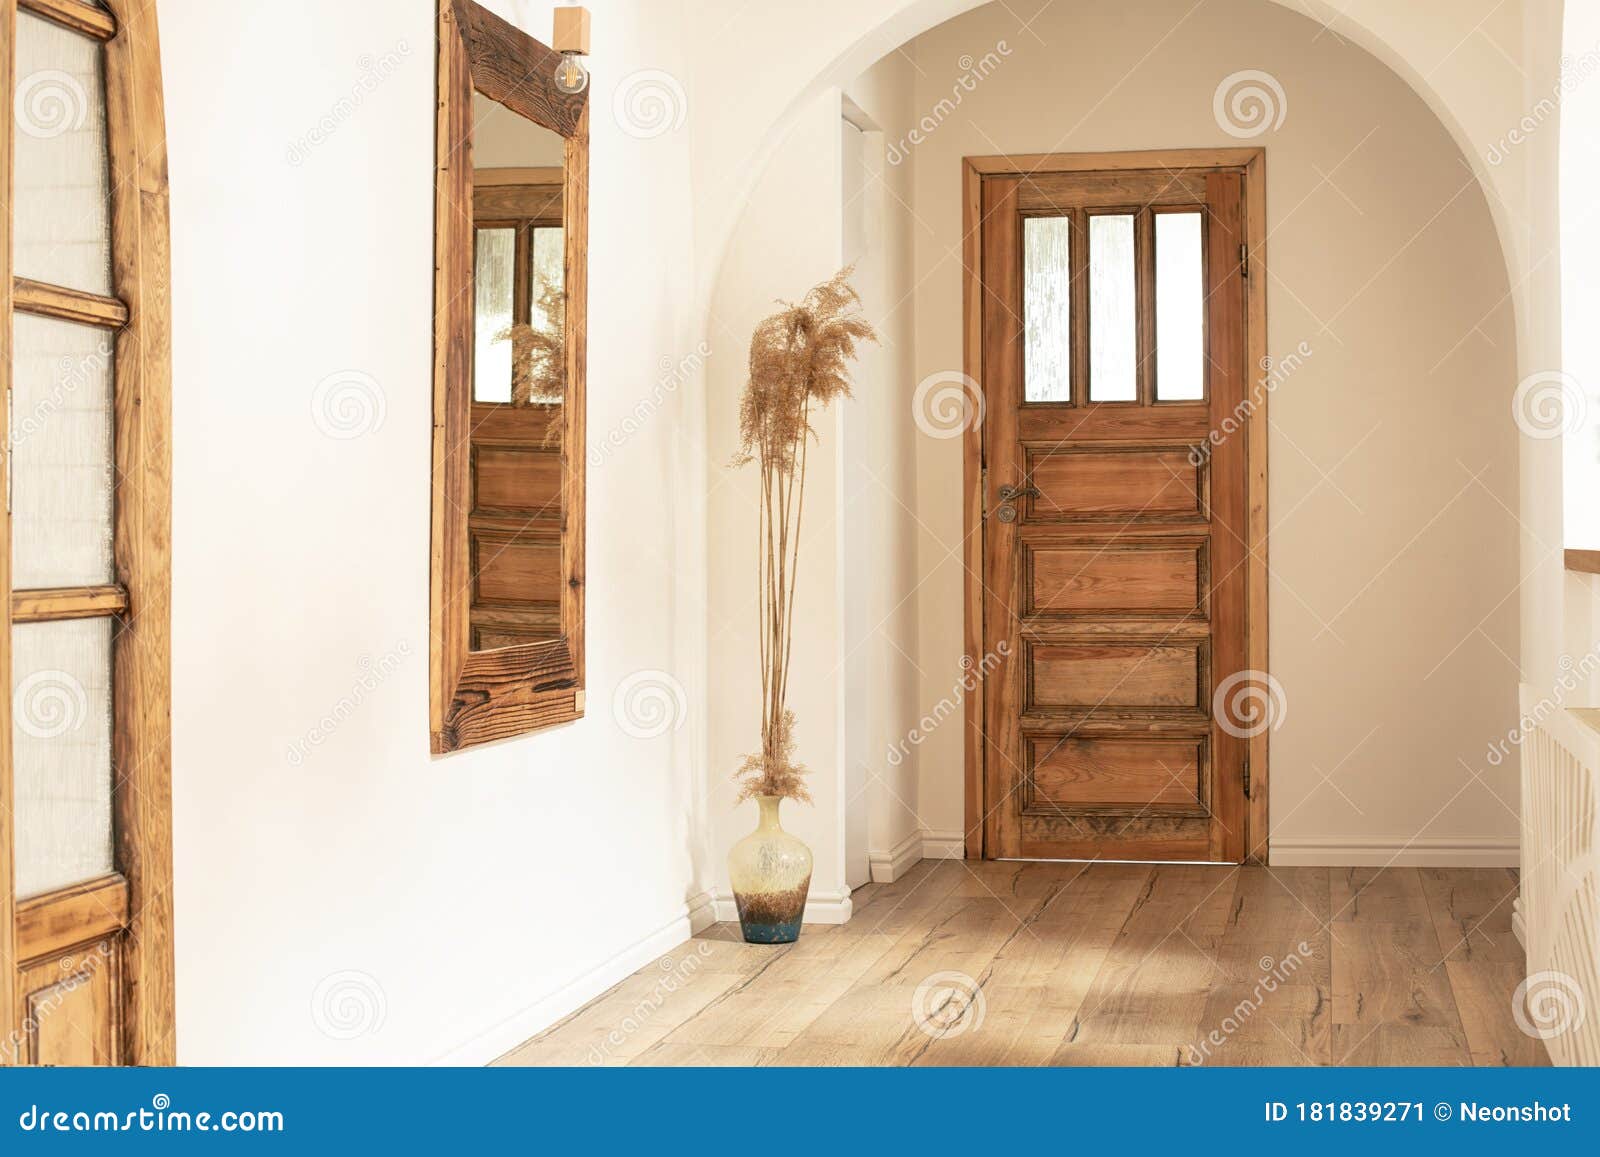 Beautiful Boho Interior Of Hallway Stock Image Image Of Mirror